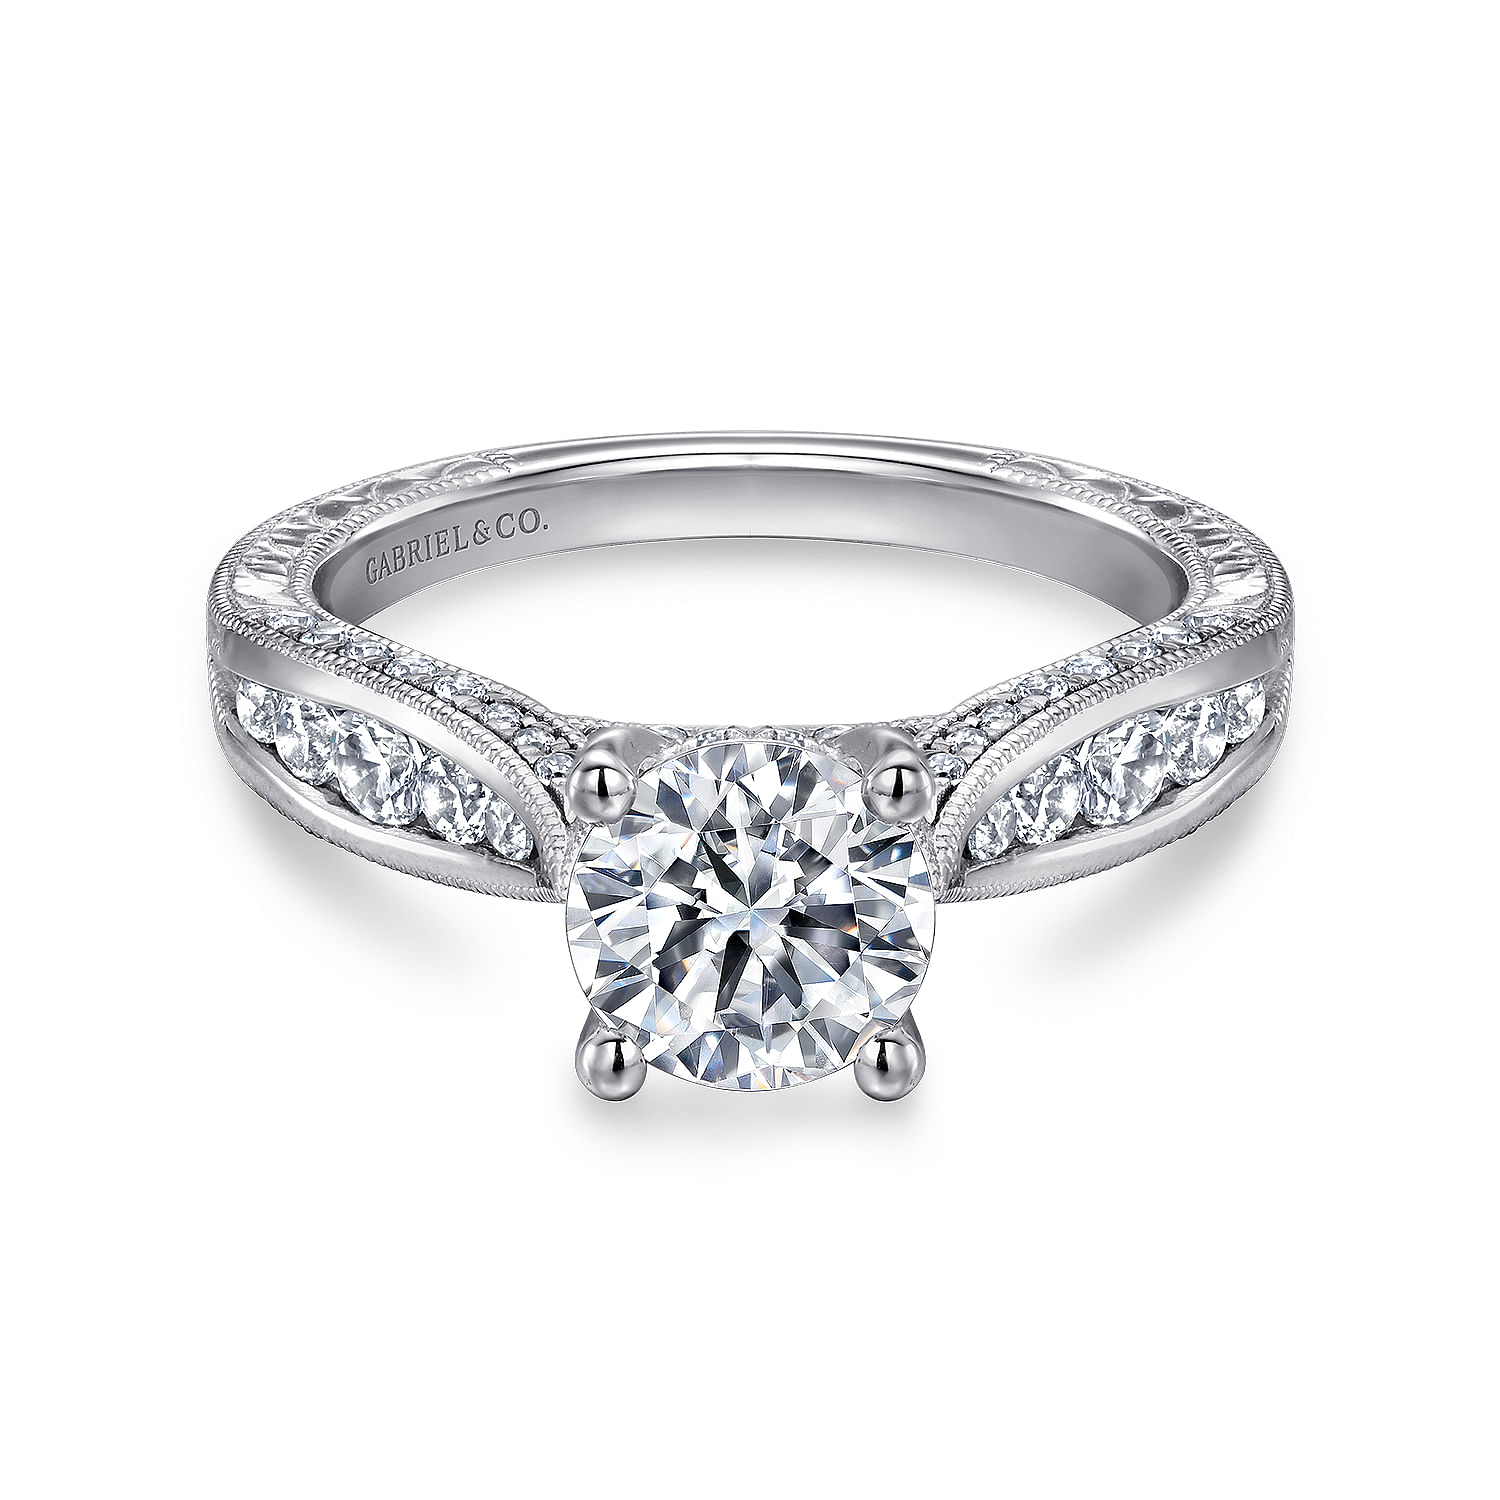 Betsy - 14K White Gold Round Diamond Engagement Ring